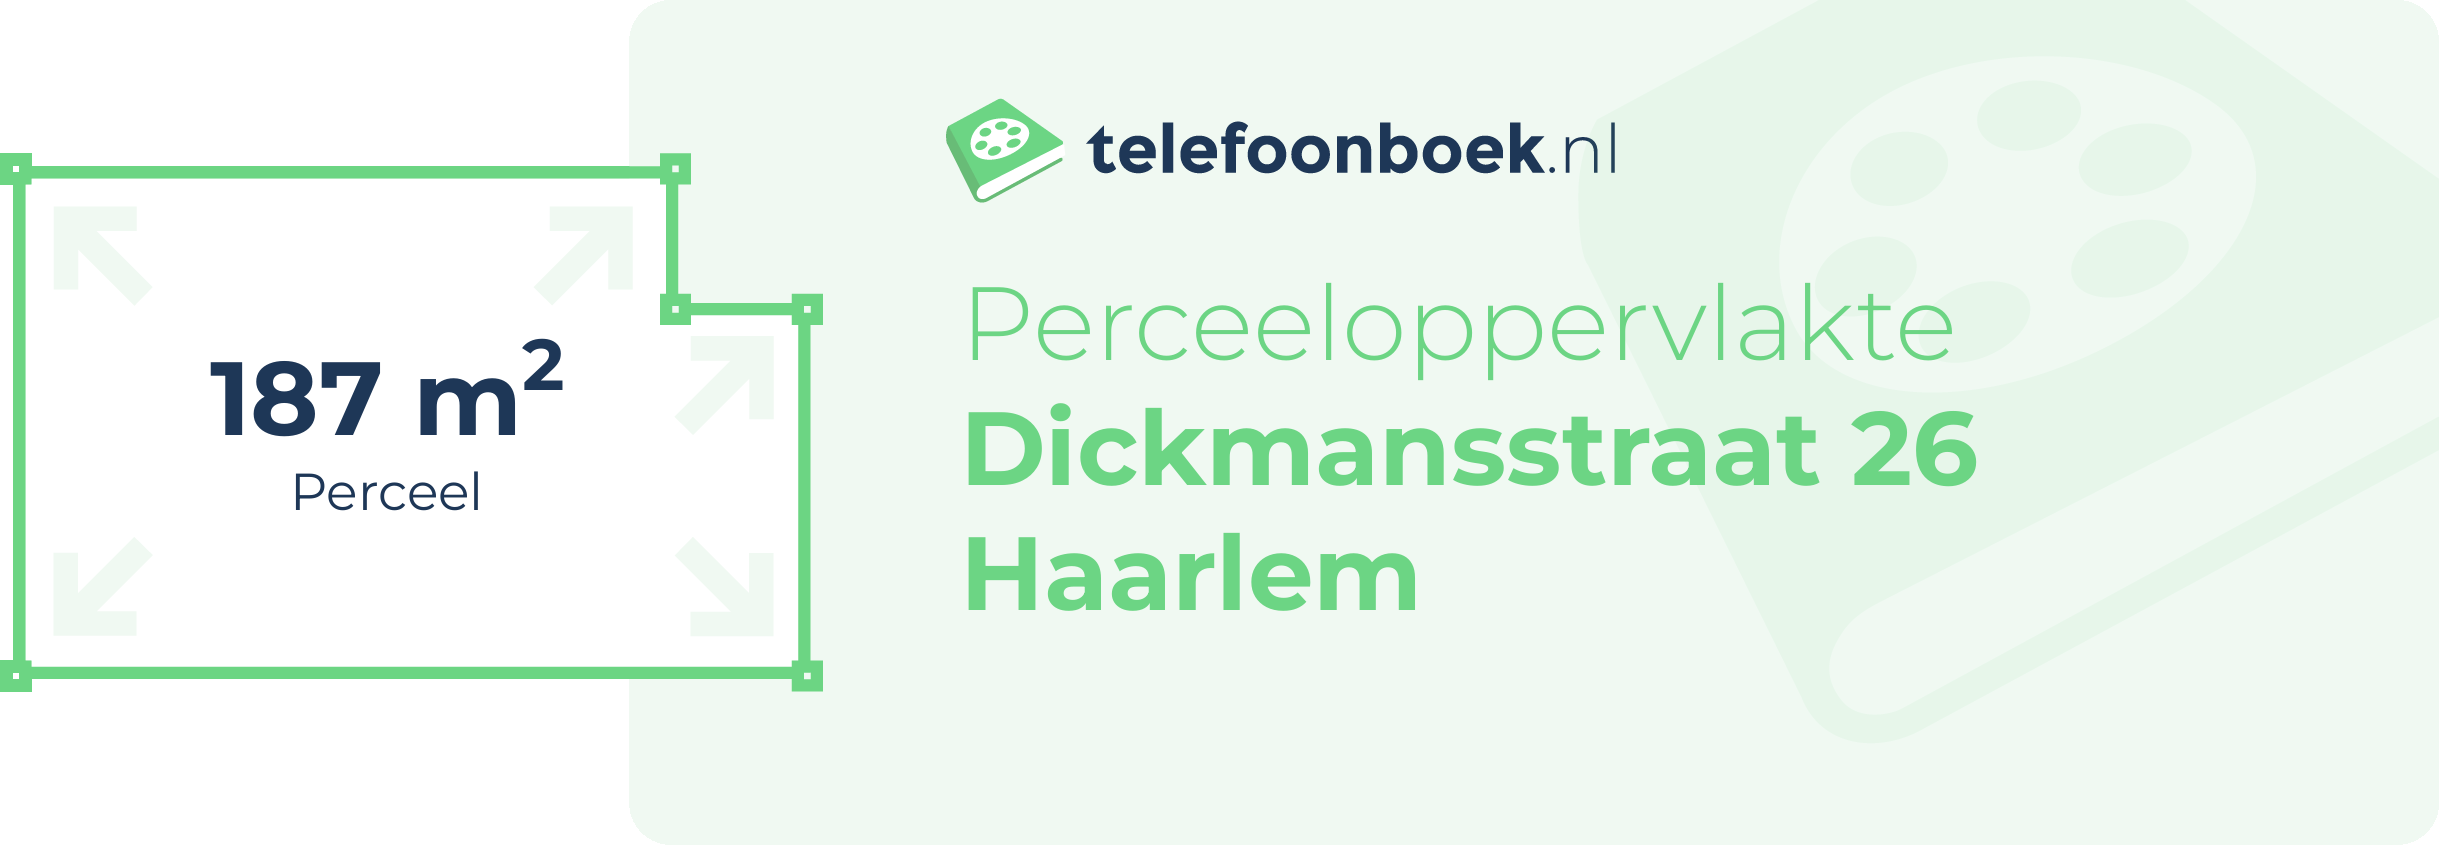 Perceeloppervlakte Dickmansstraat 26 Haarlem